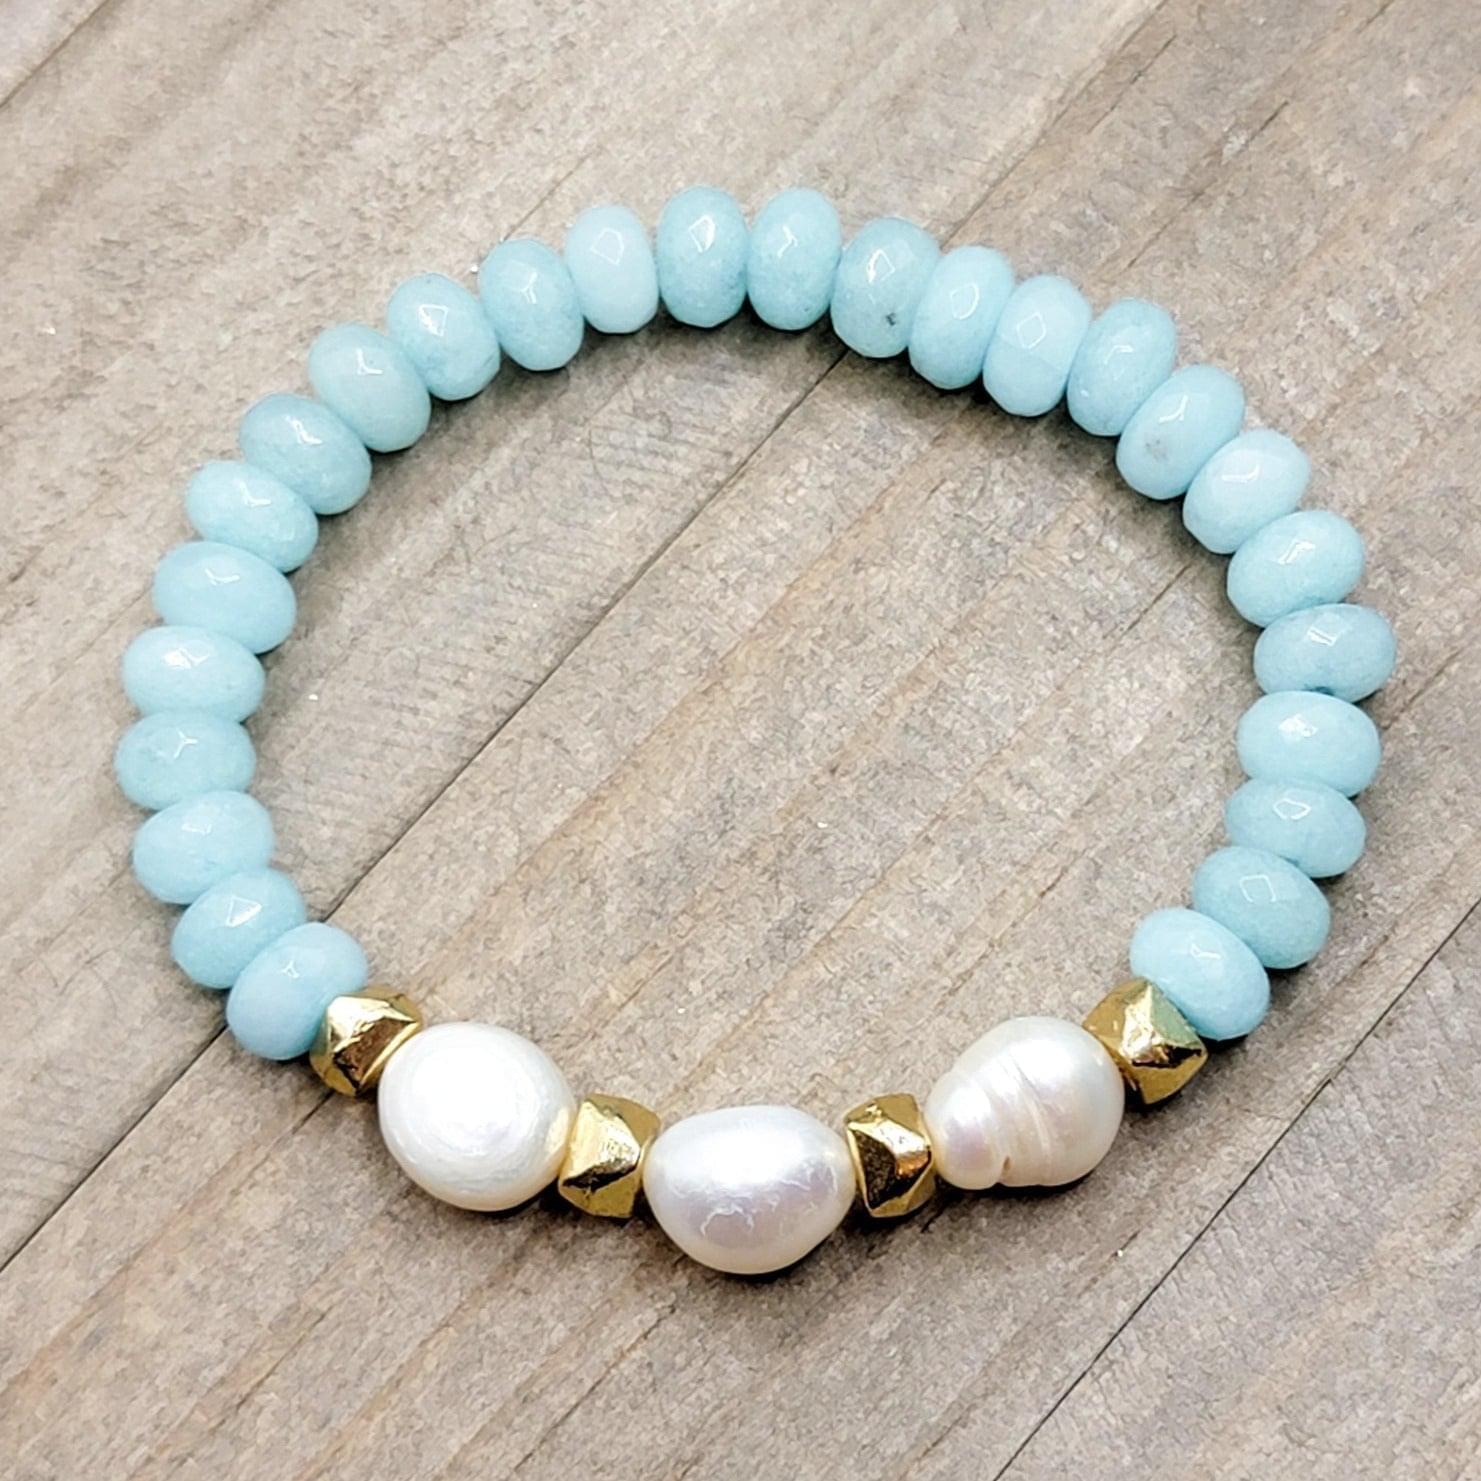 Amazonite Gemstones and Baroque Pearl Bracelet - Nicki Lynn Jewelry